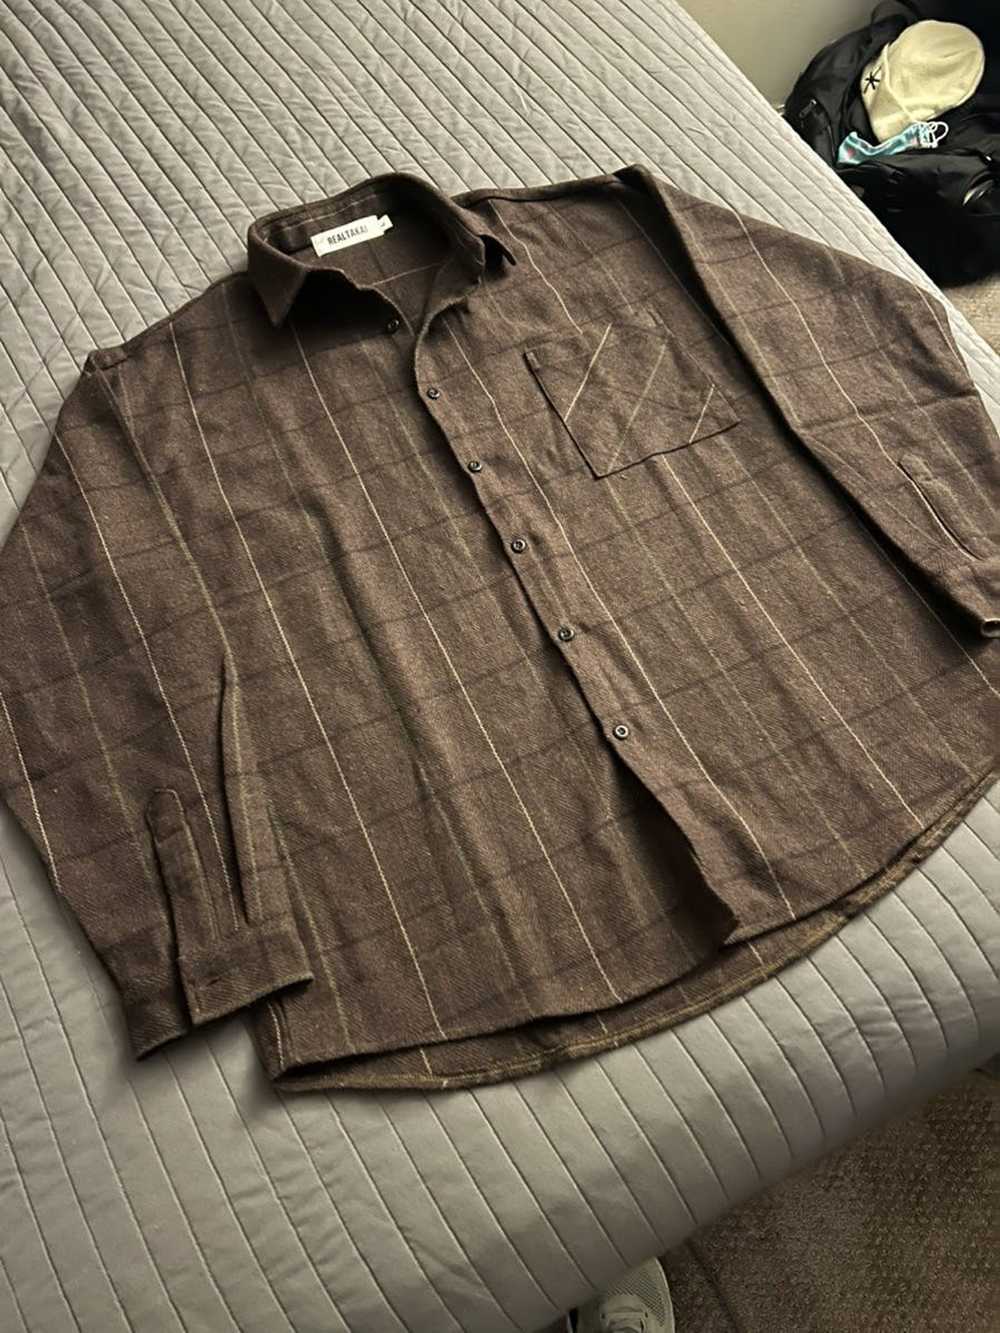 Japanese Brand Realtakai Brown Flannel - image 1